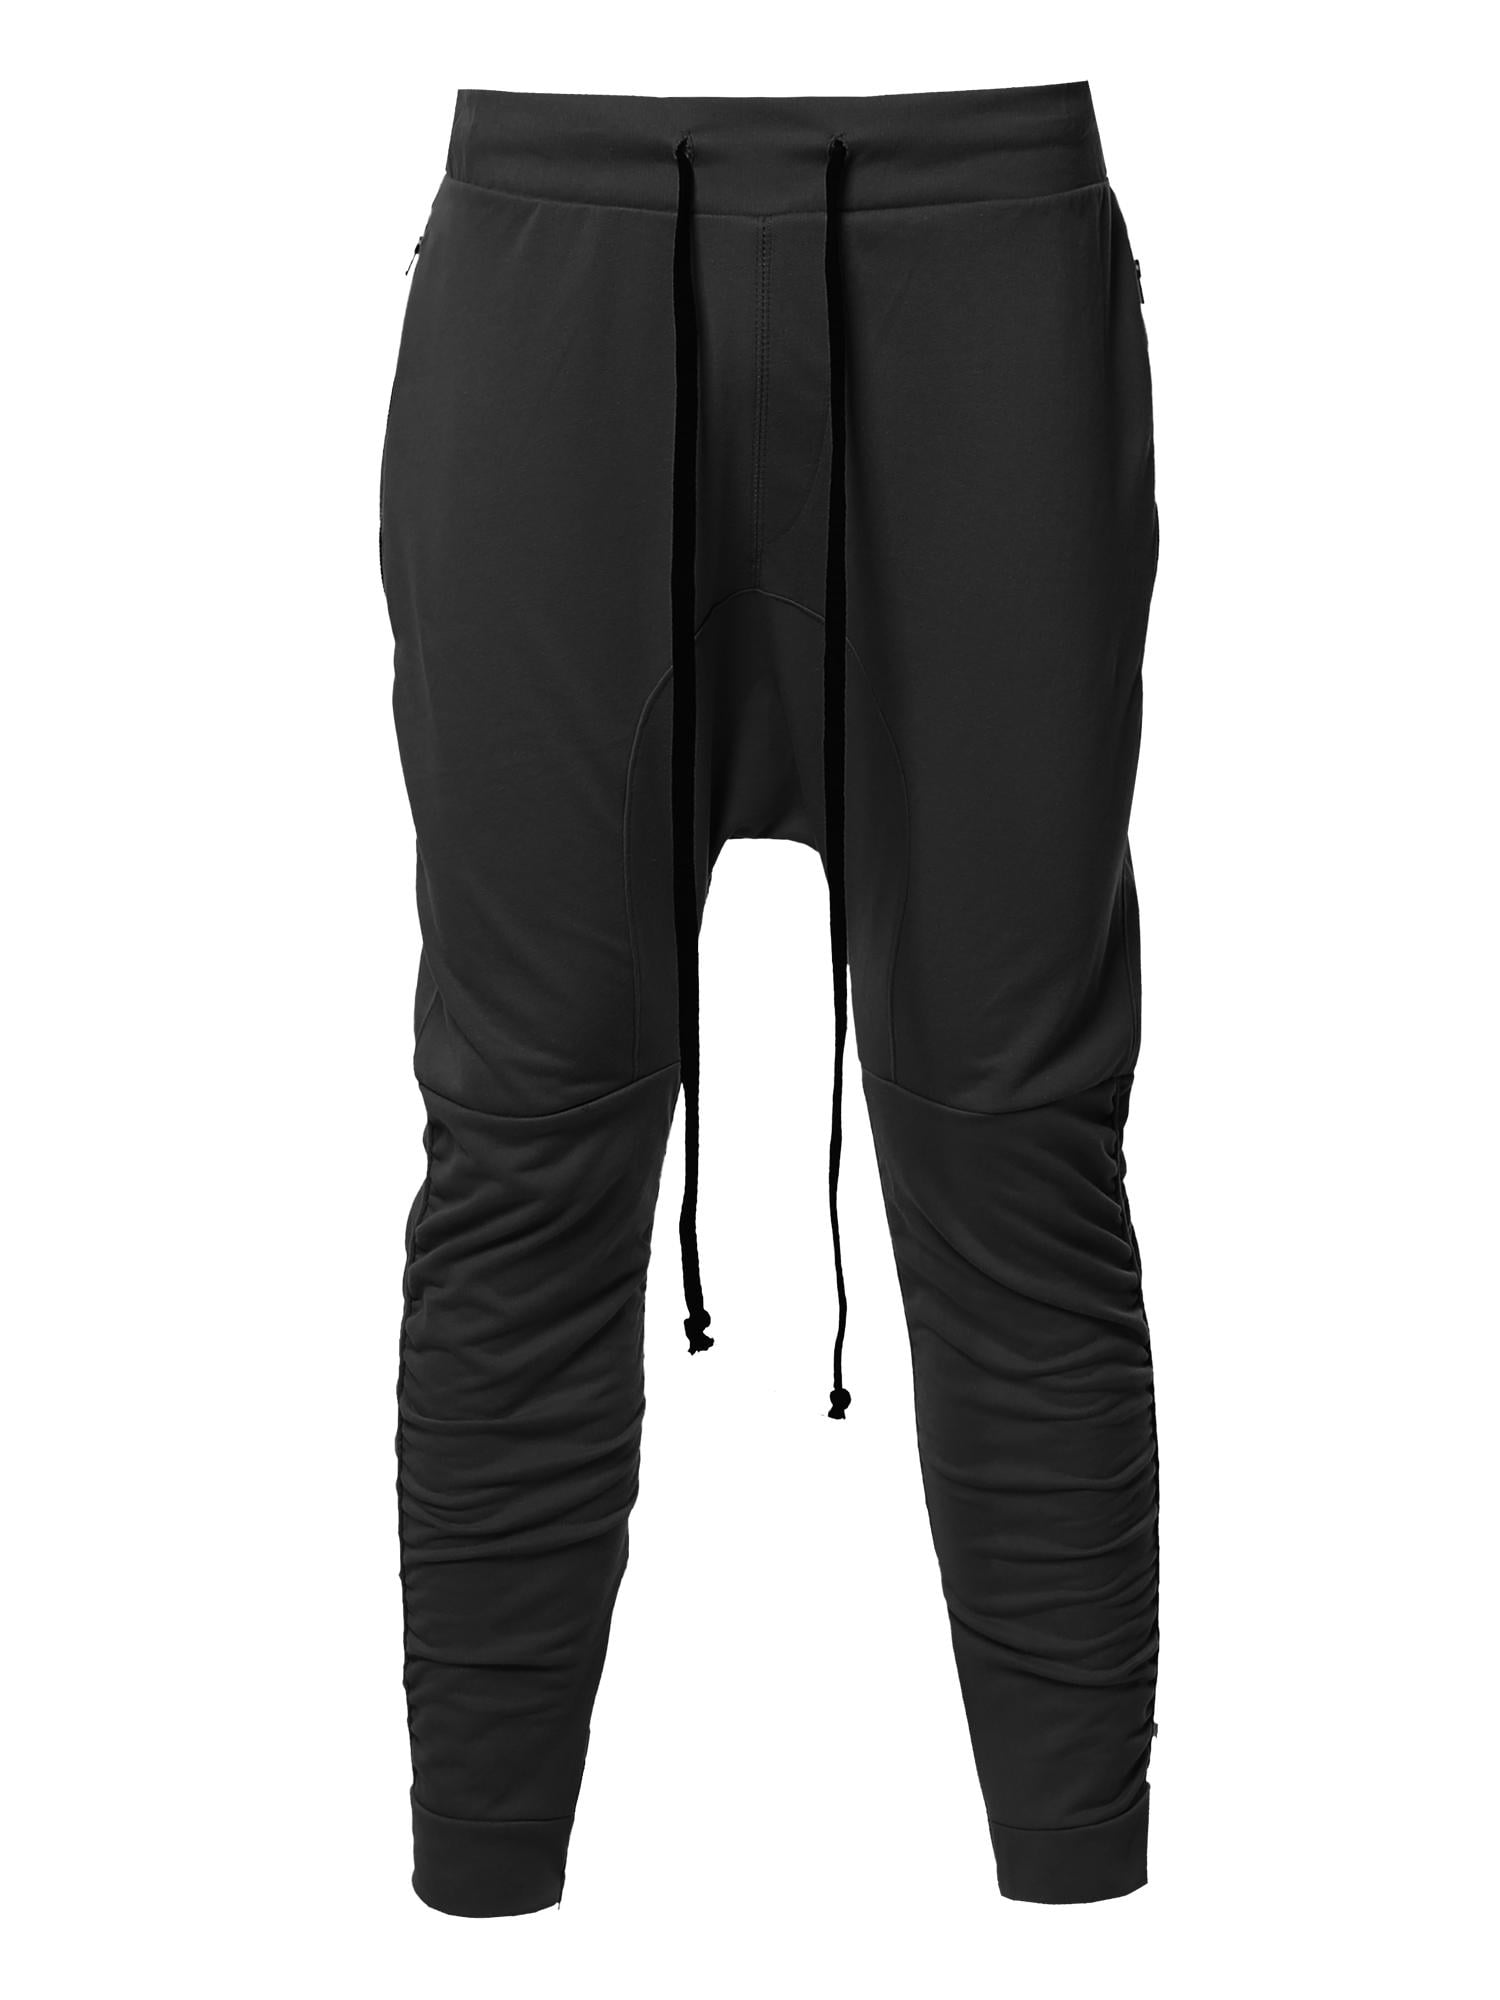 FashionOutfit Men's Baggy Harem Sportswear Jogger Pants - Walmart.com